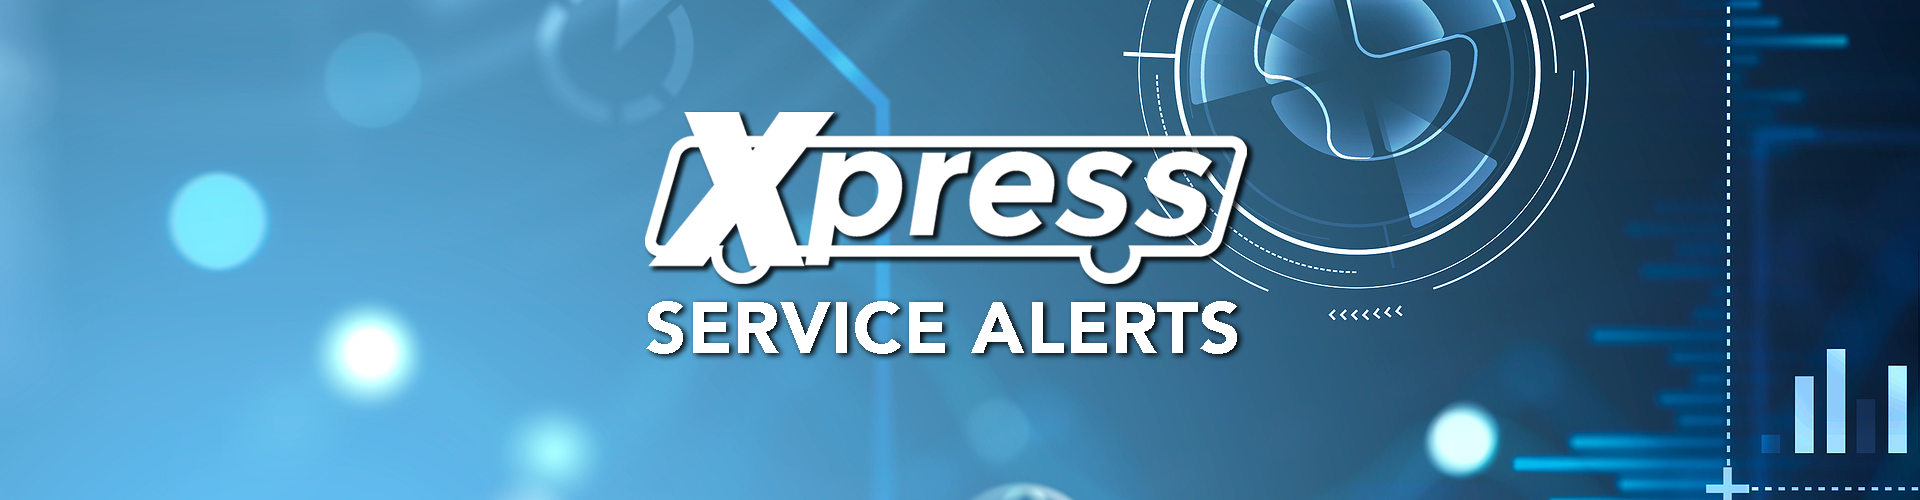 Xpress service alerts